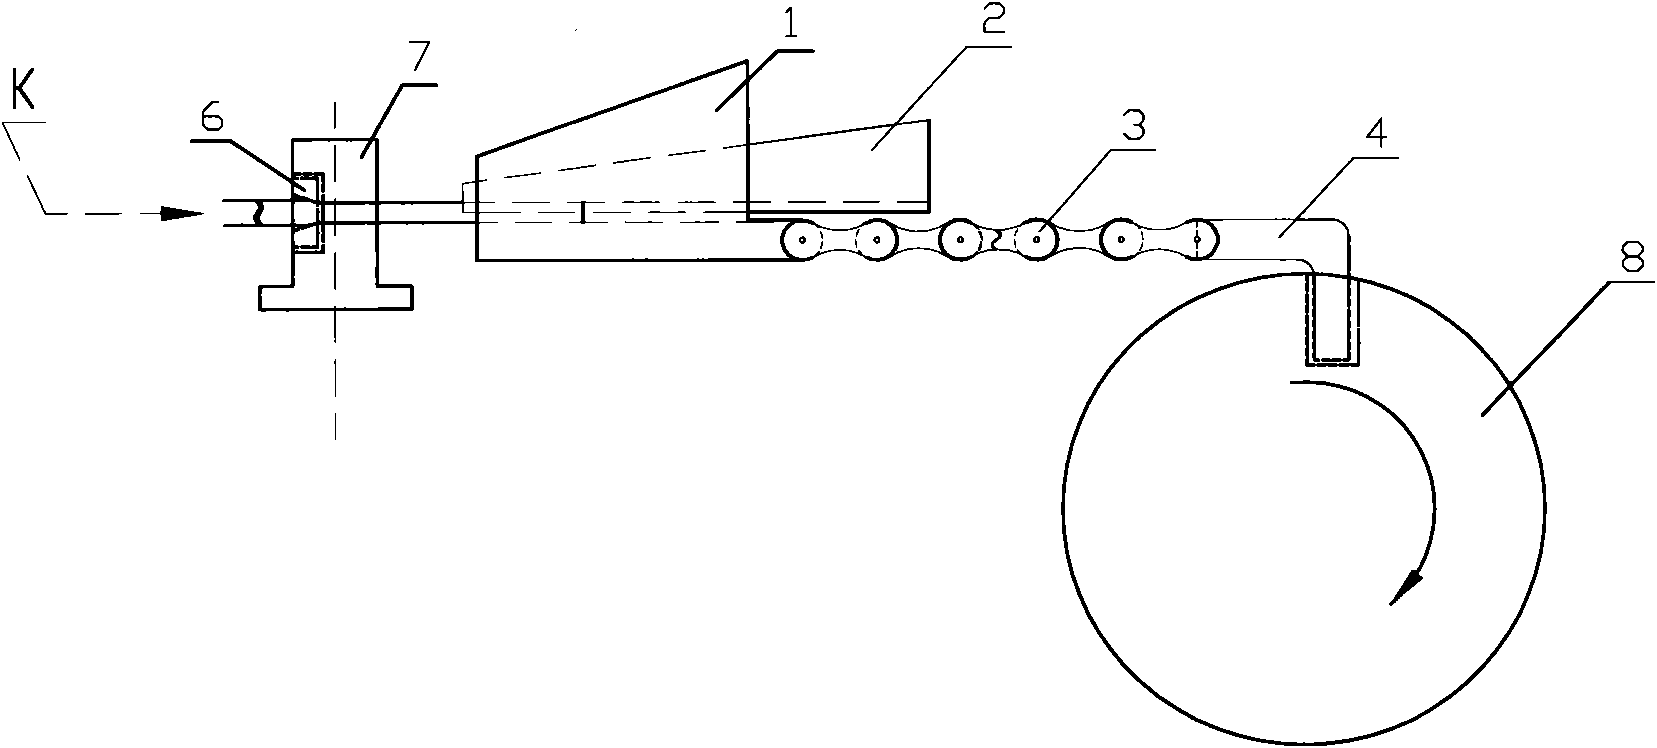 Wedge-shaped retractor